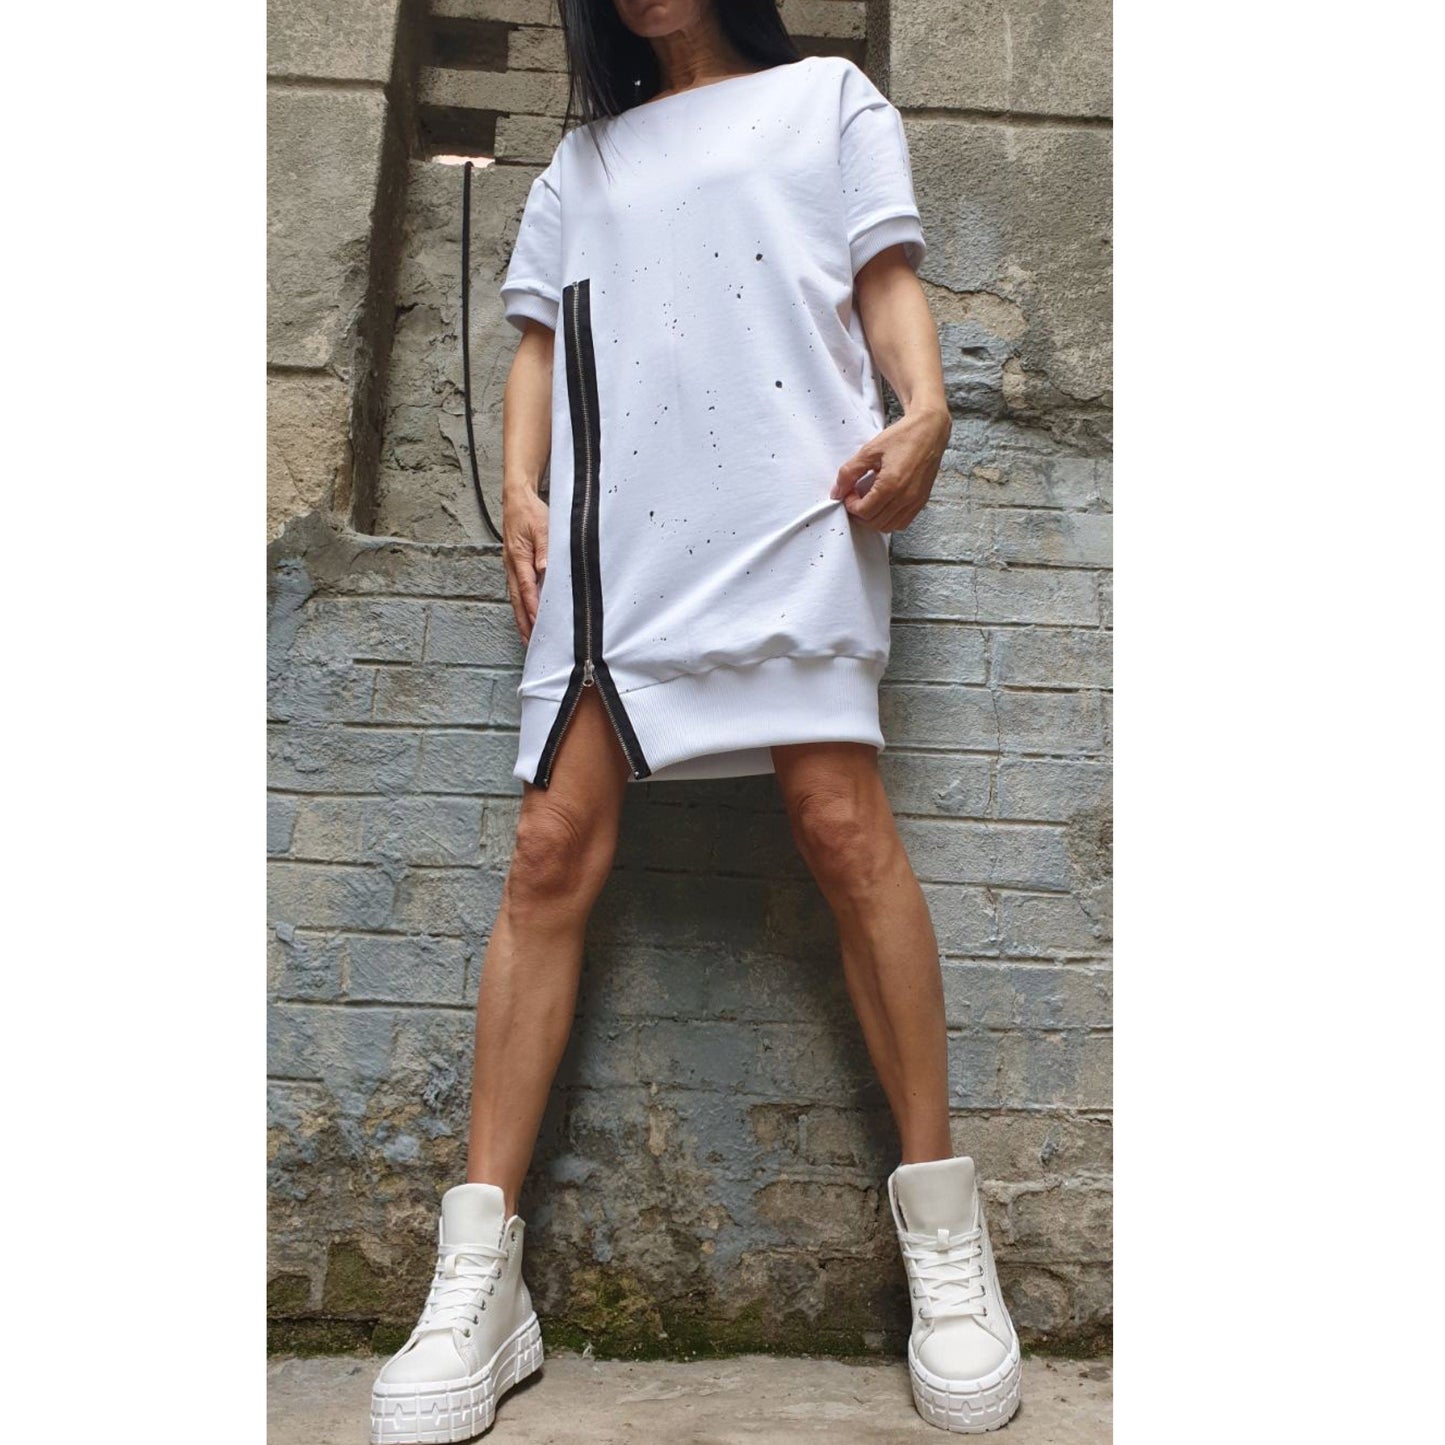 White Zipper Dress - Handmade clothing from AngelBySilvia - Top Designer Brands 